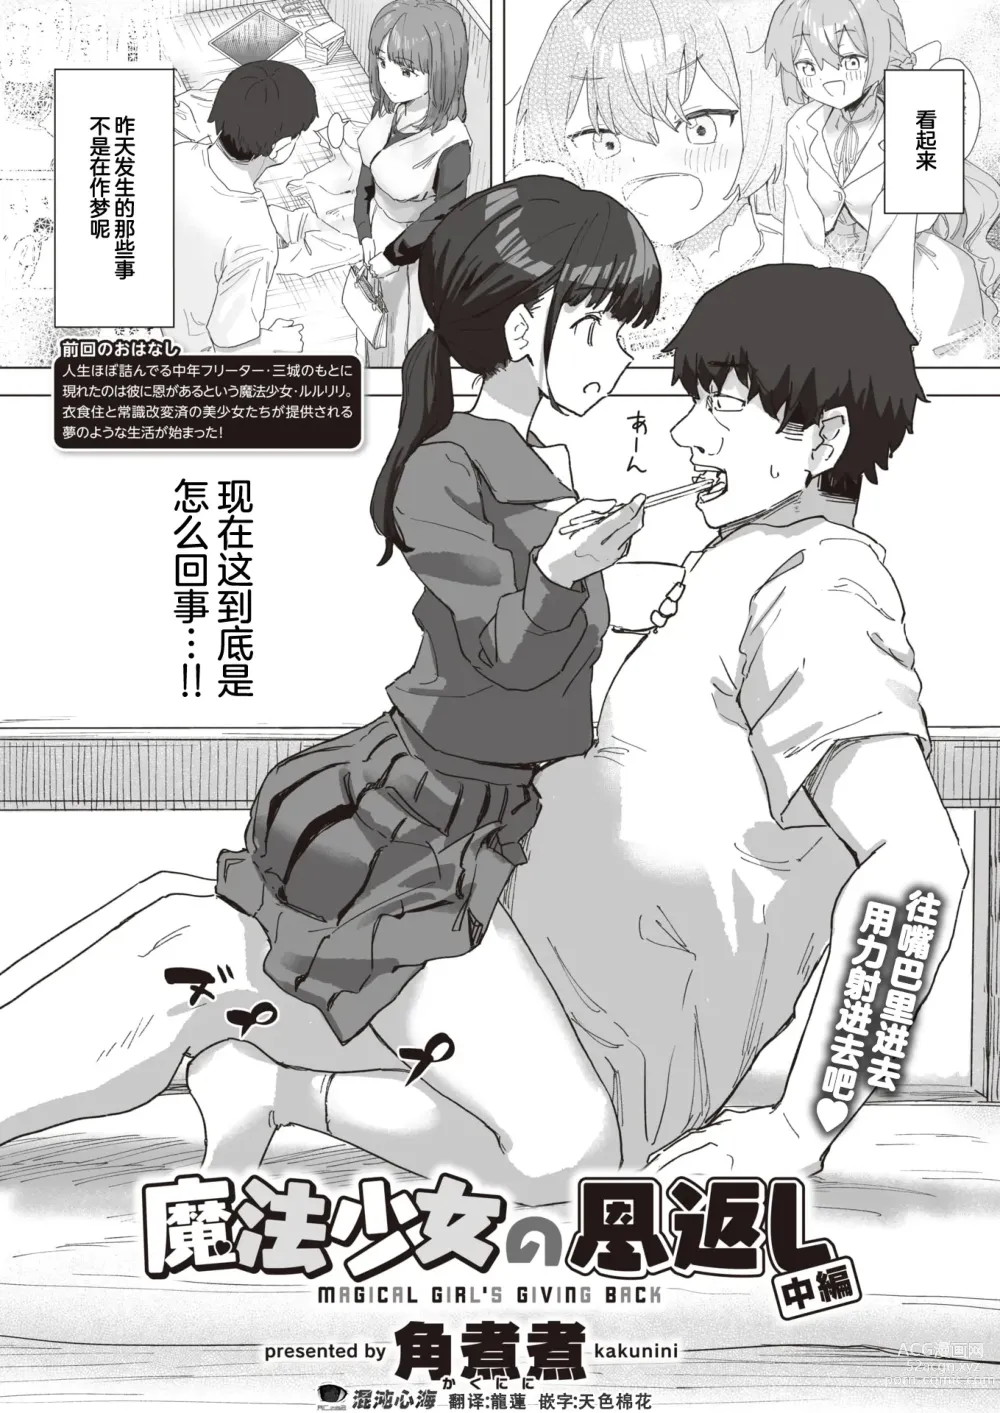 Page 1 of manga Mahou Shoujo no Ongaeshi Chuuhen - Magical Girls Giving Back